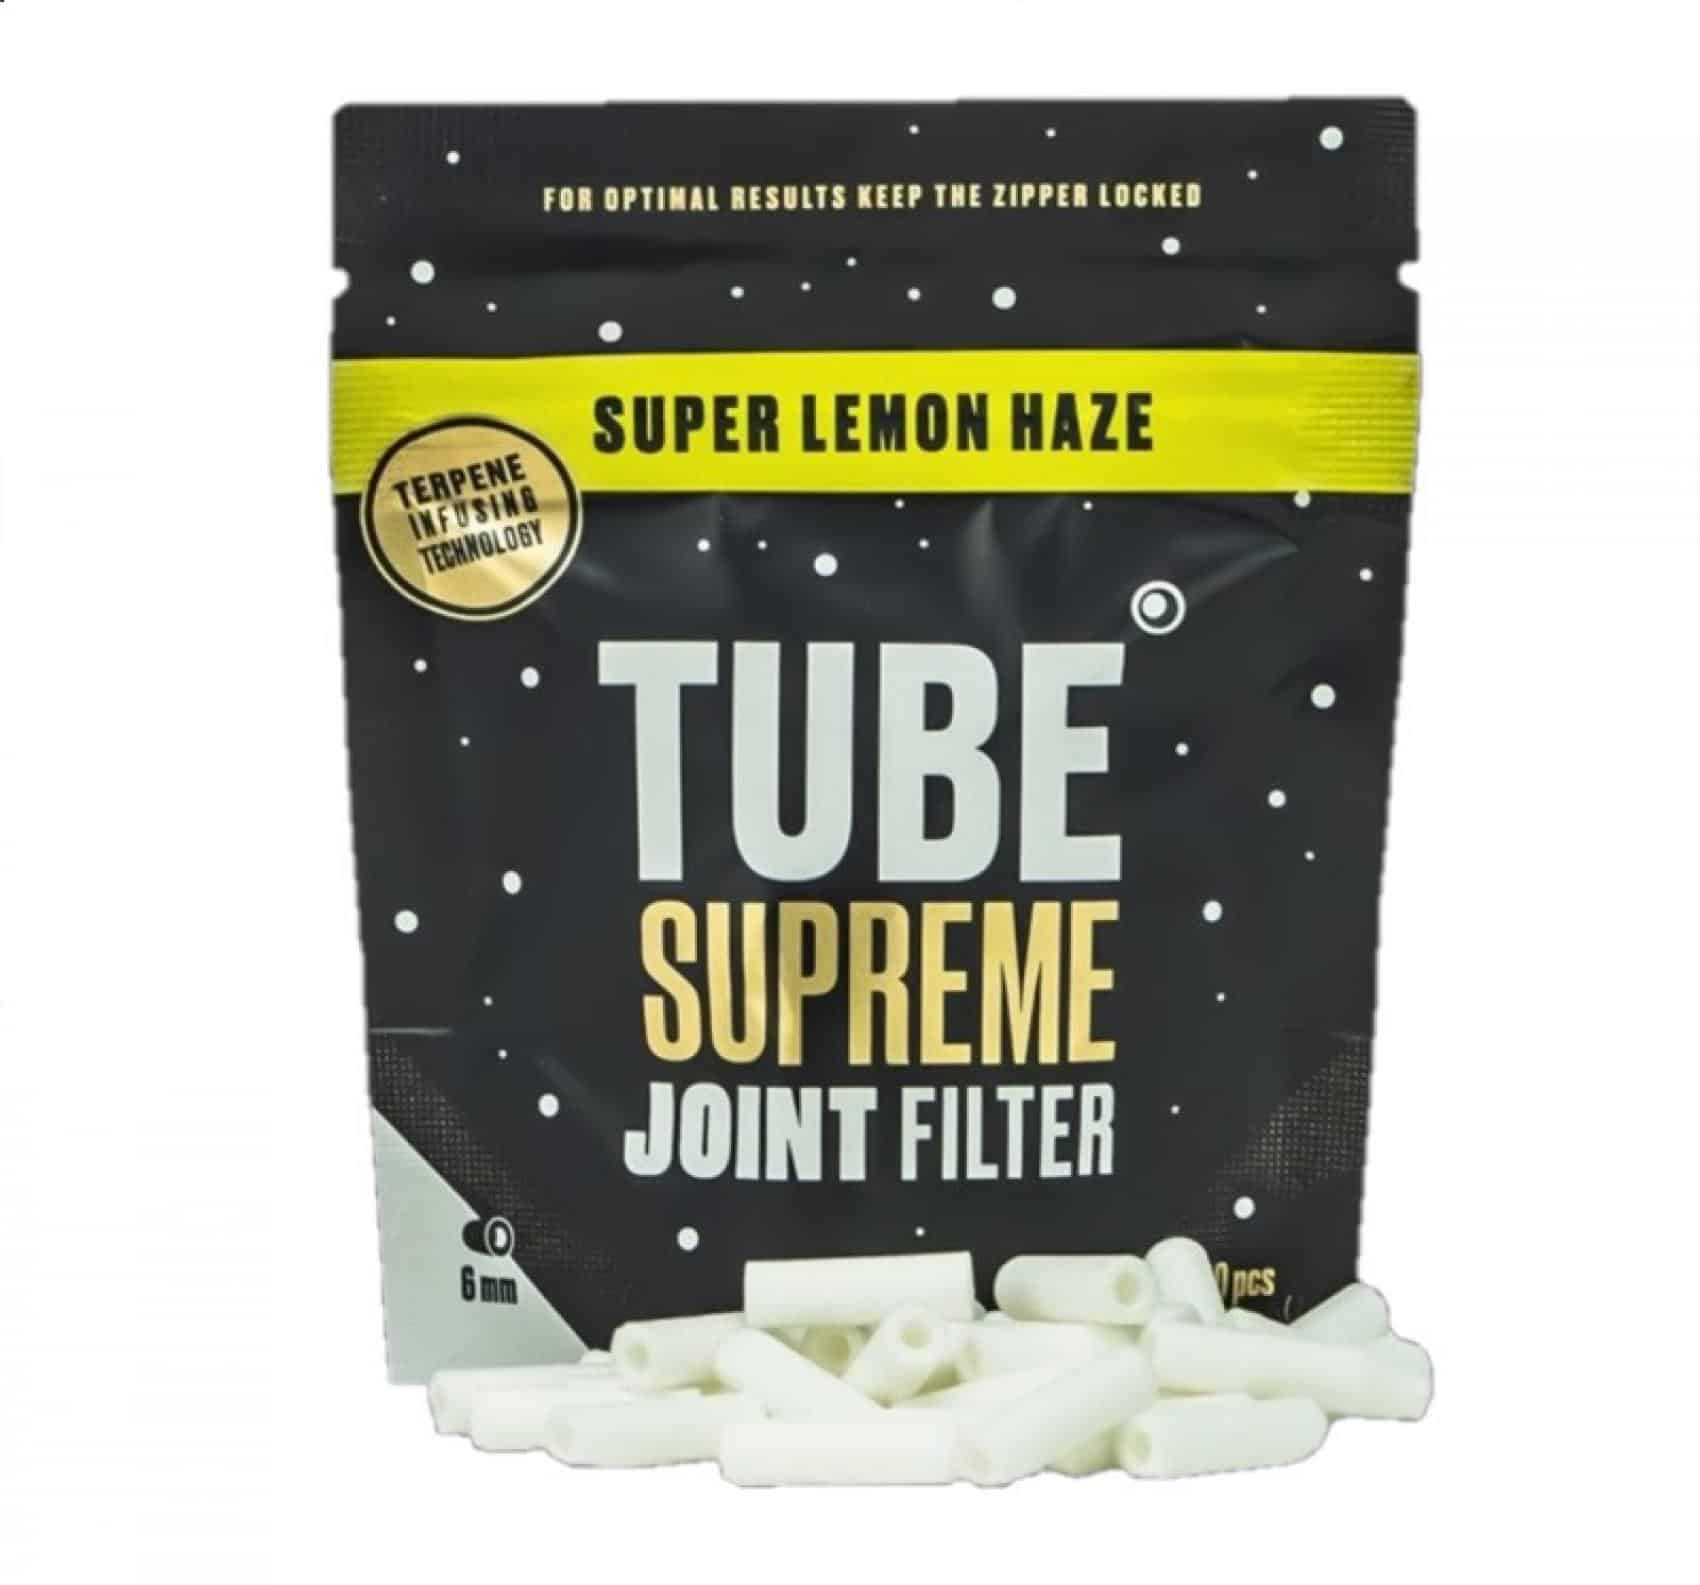 Tube Supreme Joint Filter - Super Lemon Haze